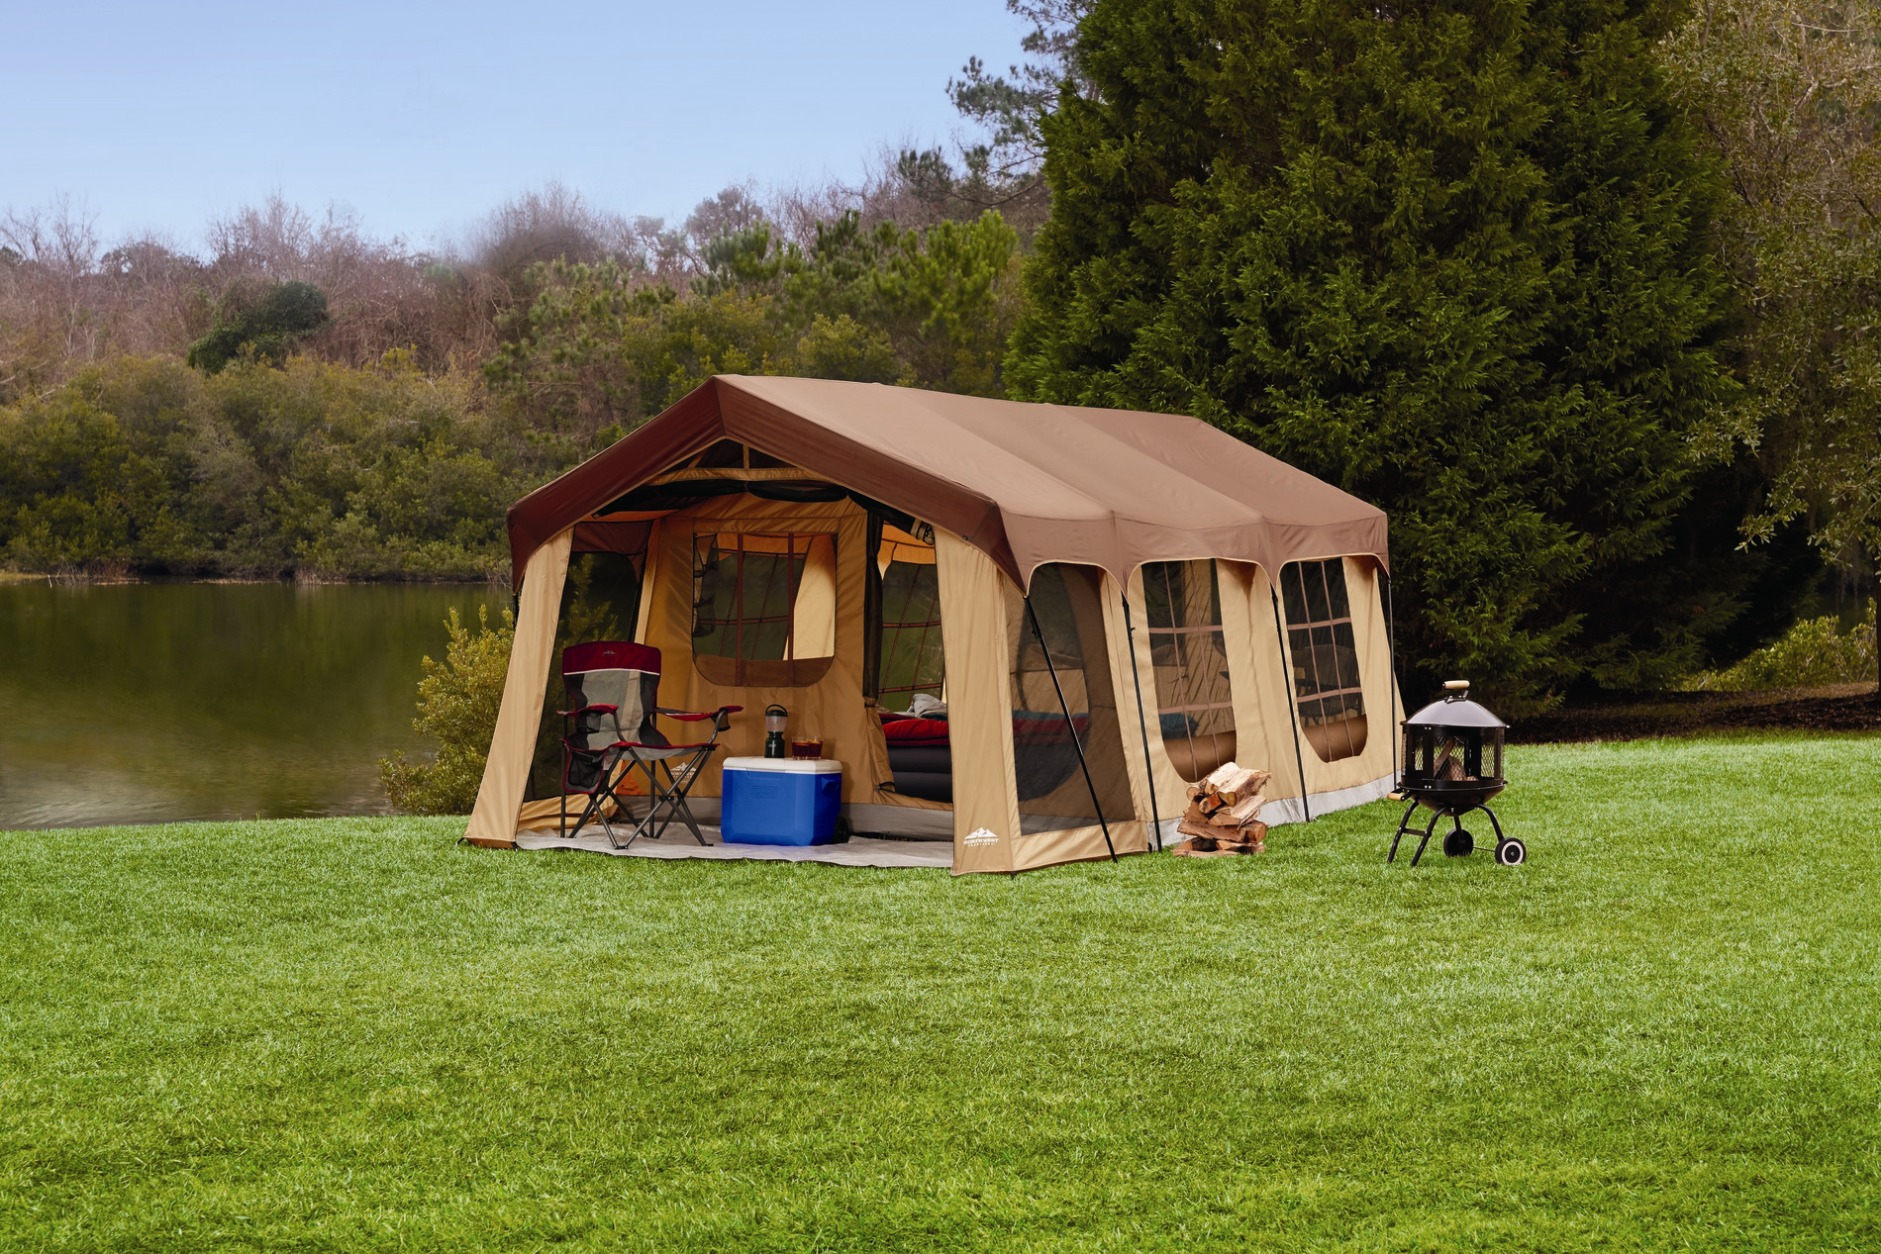 Camping home. Тент-палатка Taumann Camping House. Northwest палатка 6 person. Домики для отдыха. Кемпинг домики.